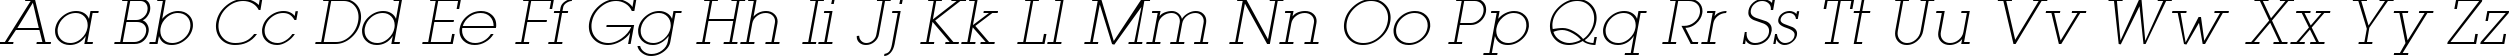 Пример написания английского алфавита шрифтом LugaExtra ExtraLight Oblique